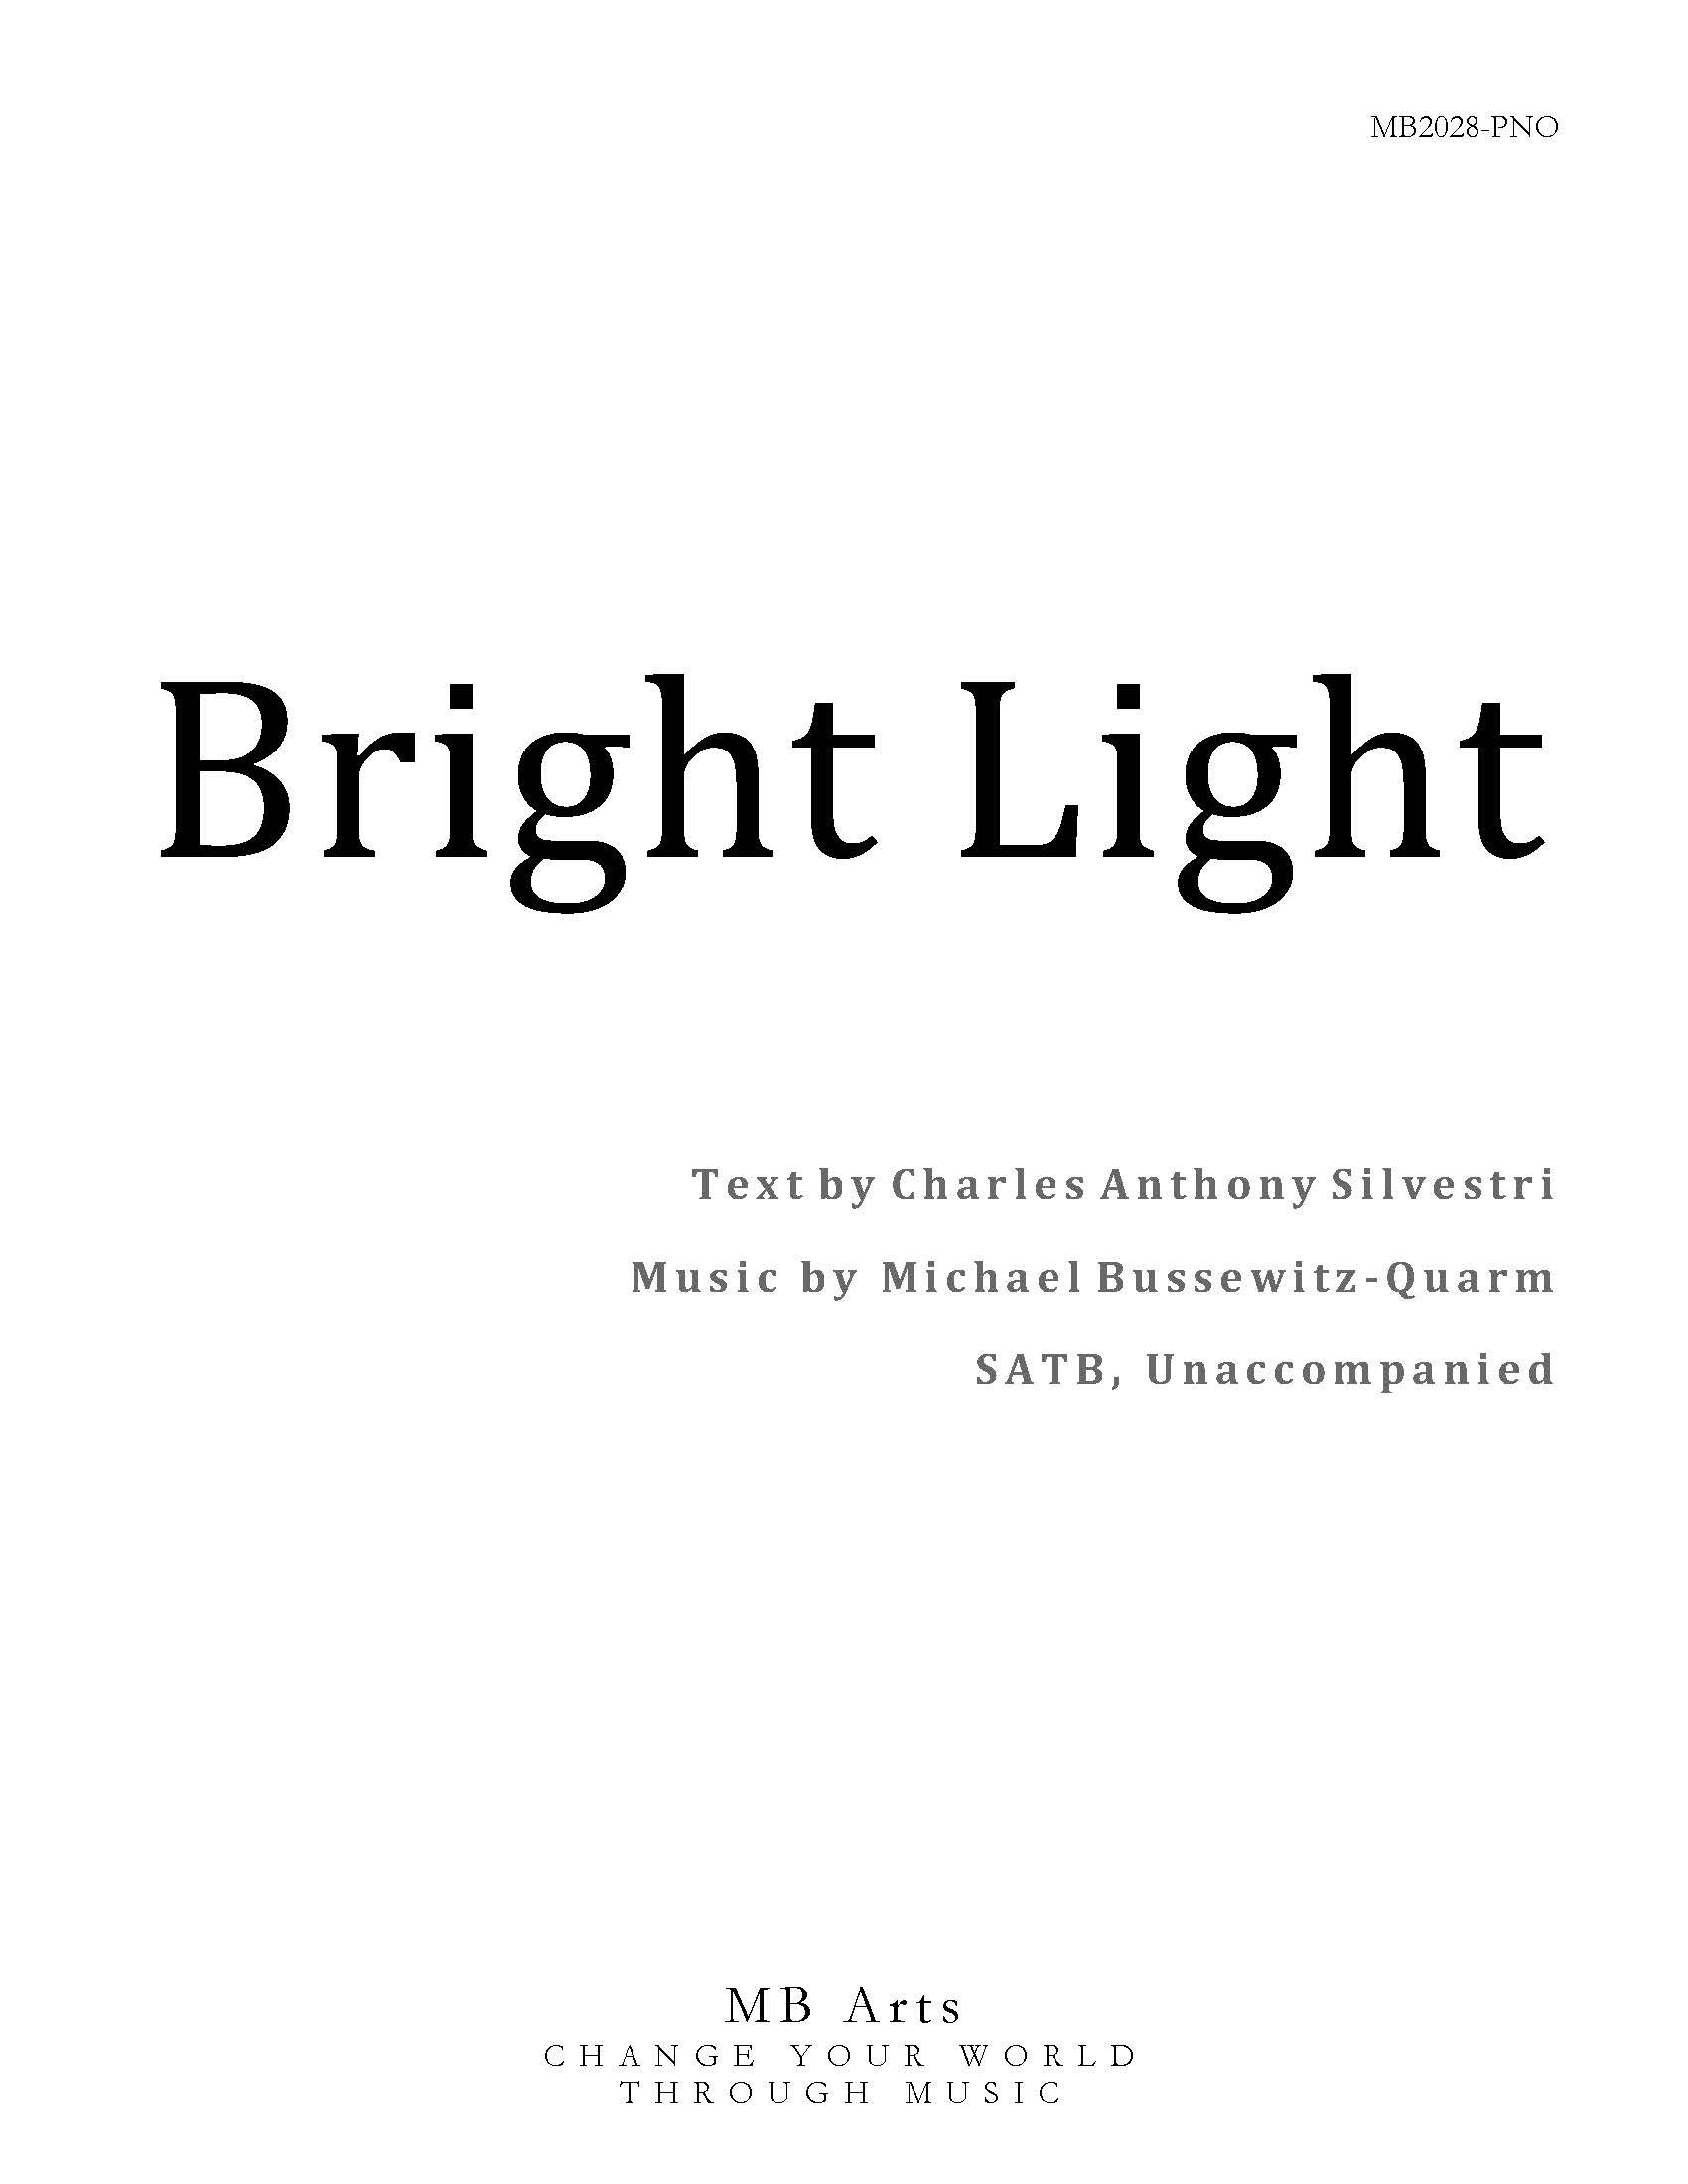 Bright Light community sheet music cover